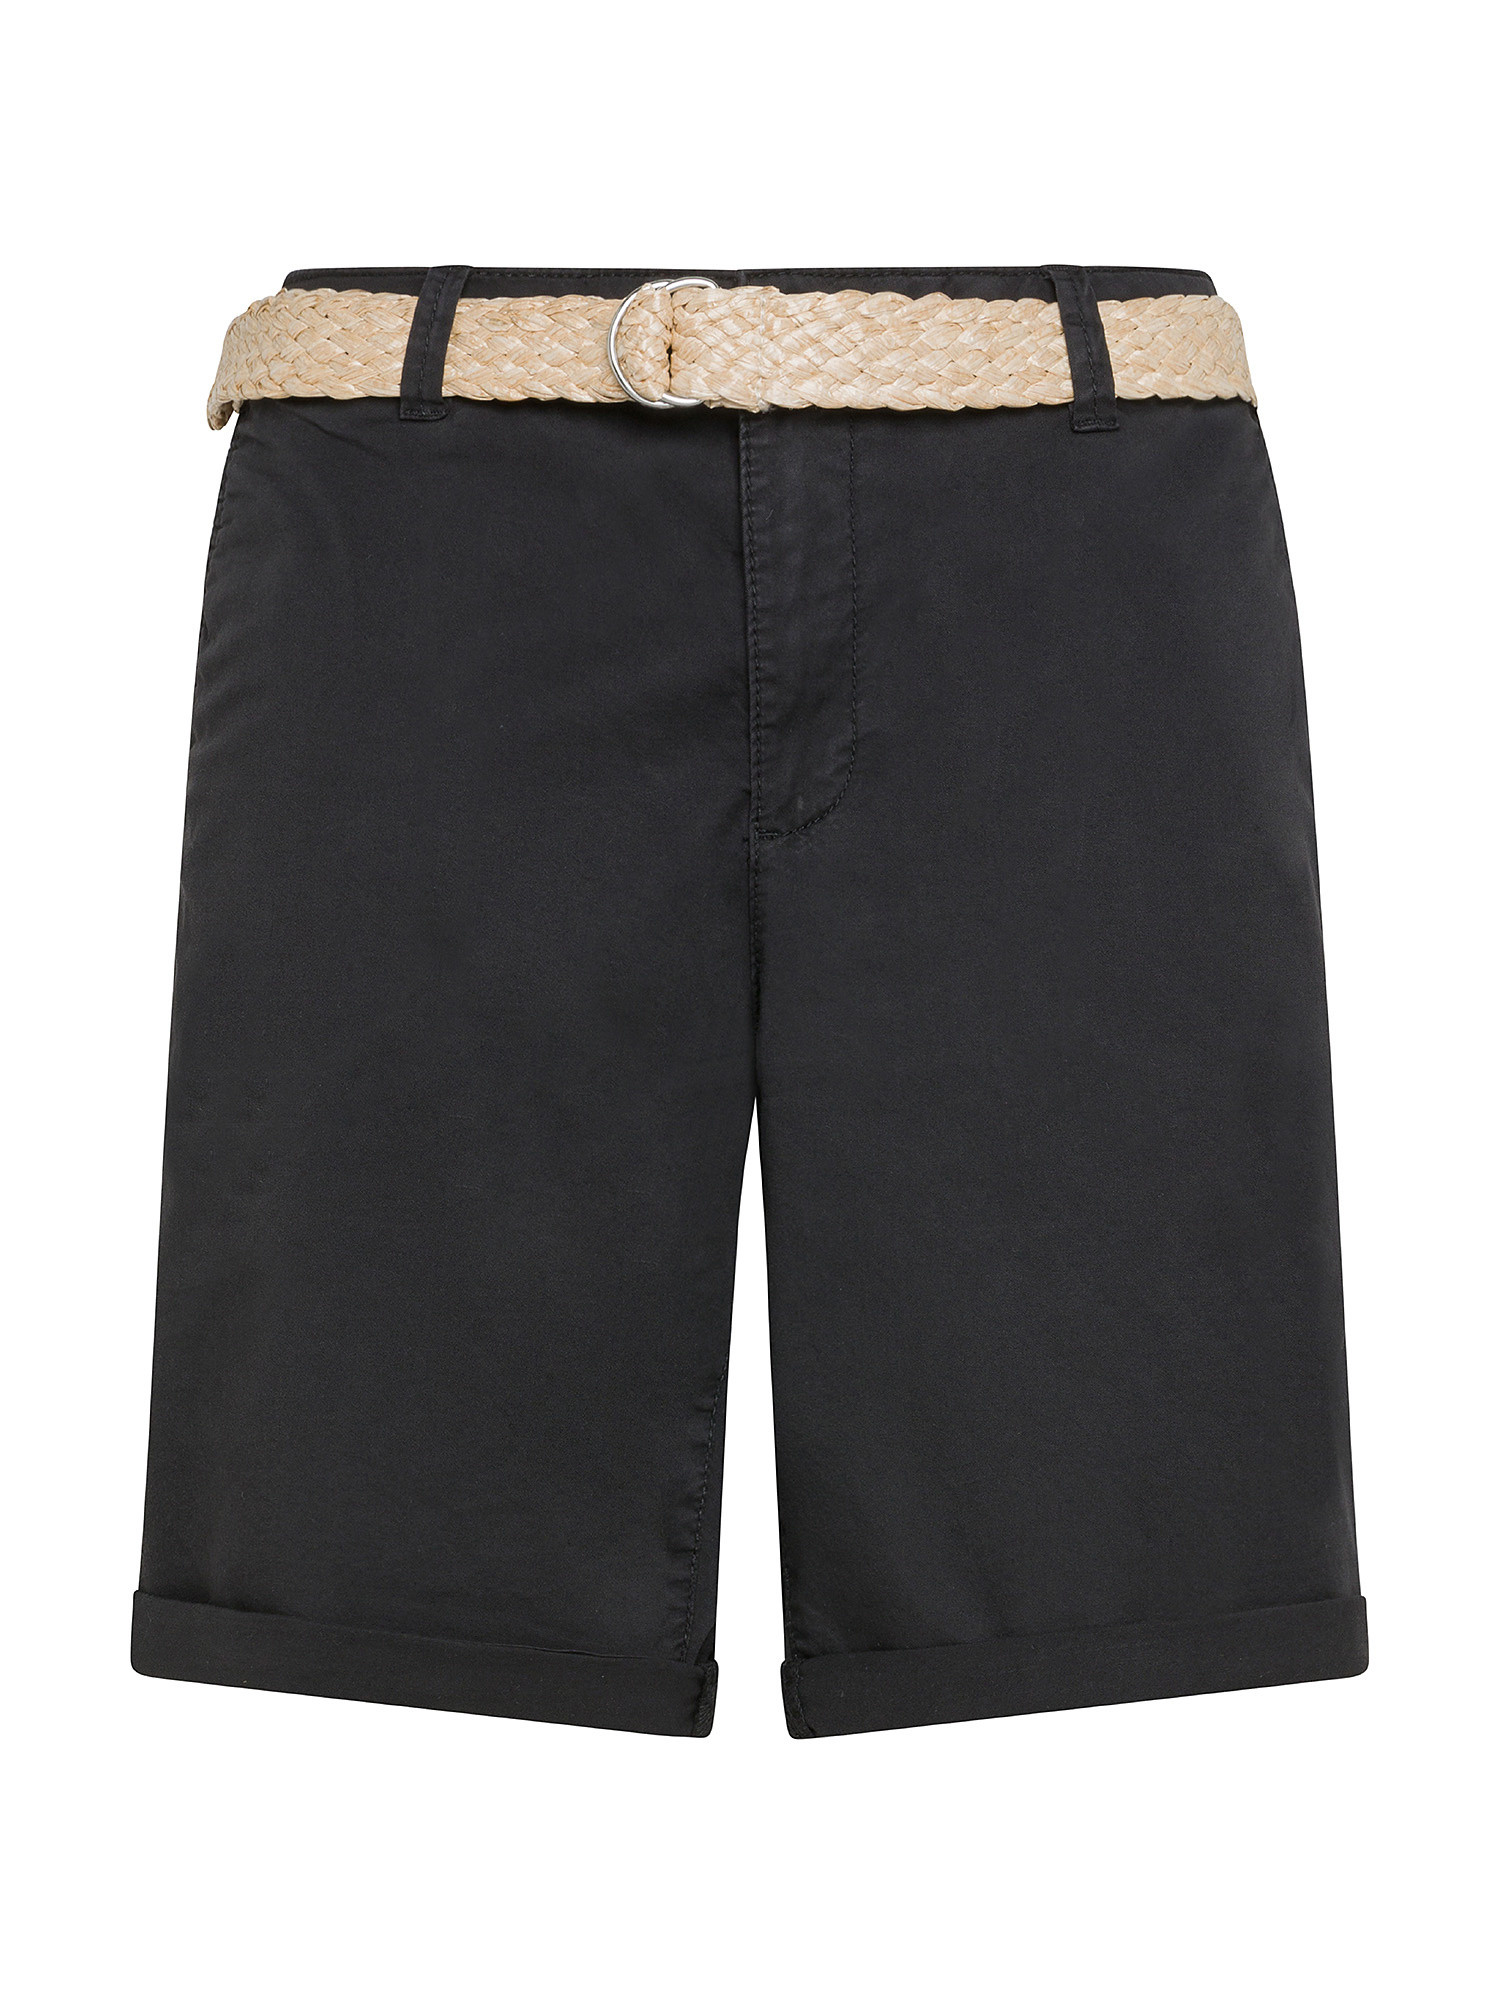 Esprit - Shorts with braided raffia belt - Coin.it | Coin Ecom